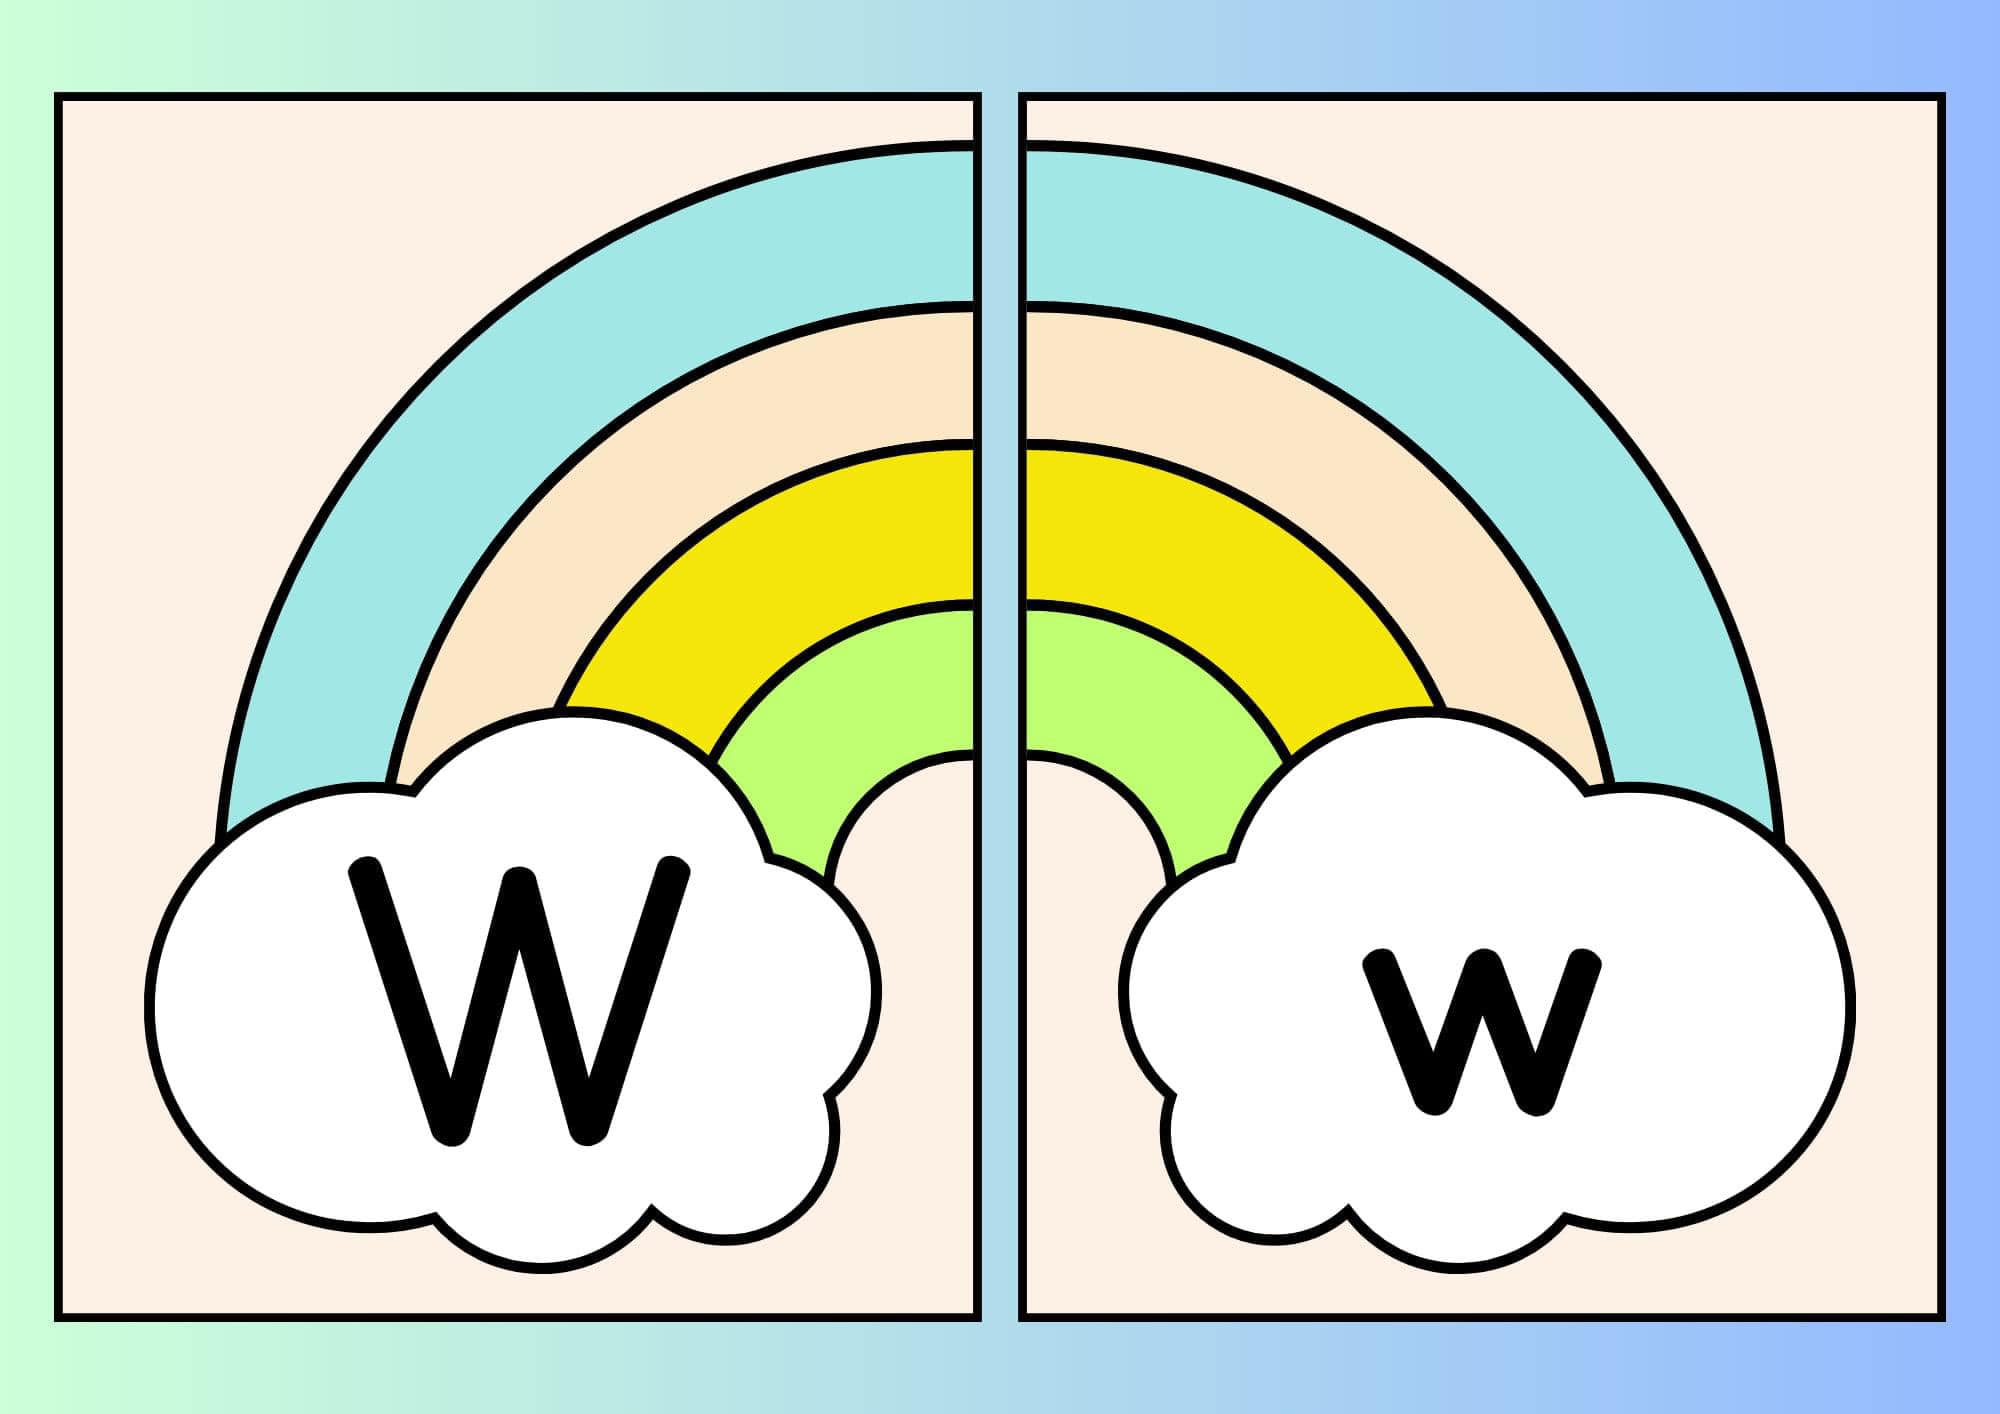 Alfabeto arco íris Ww